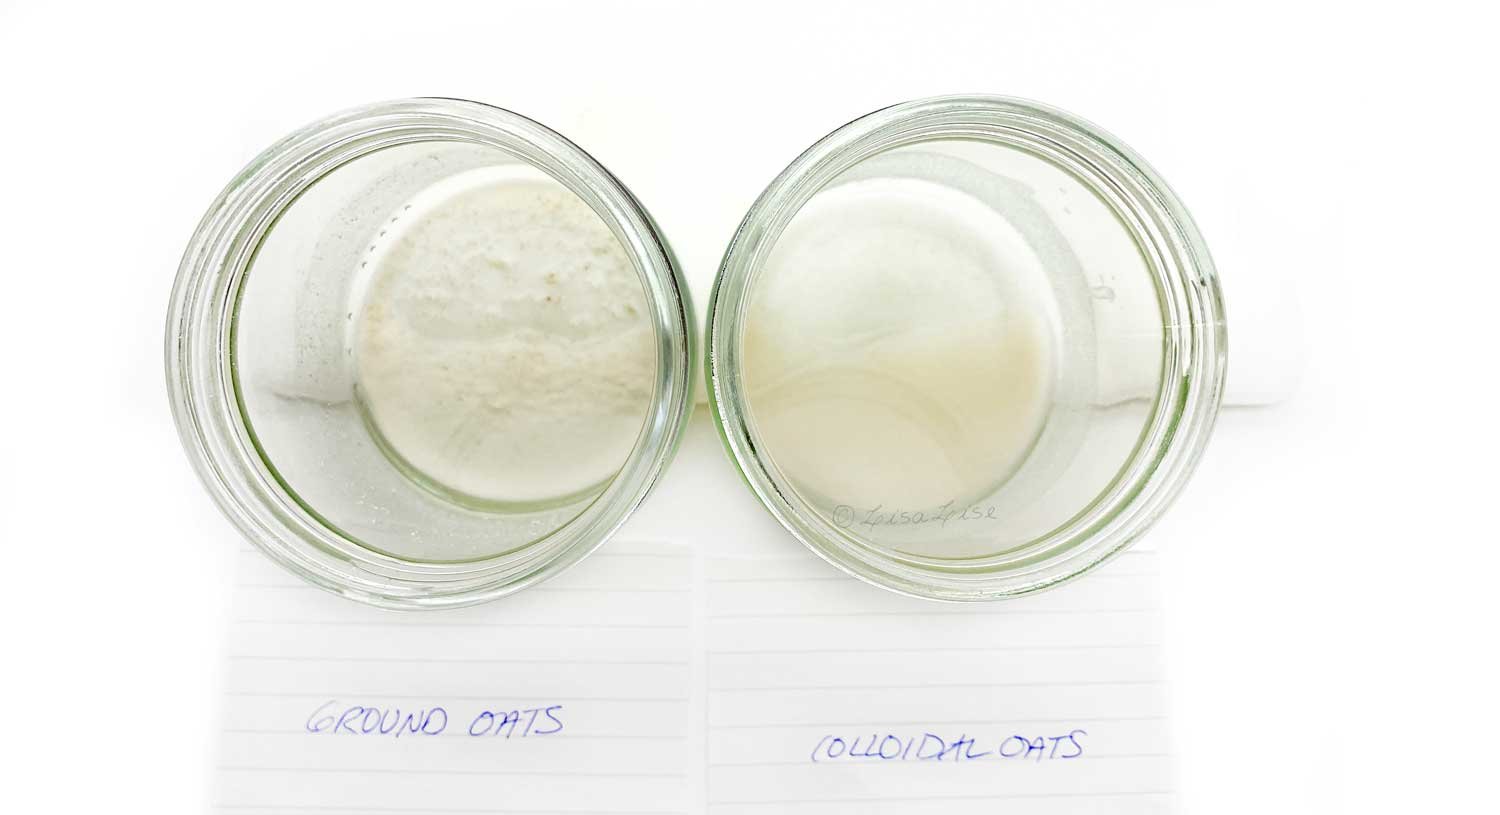 What Makes Colloidal Oatmeal Colloidal? — LisaLise Pure Natural